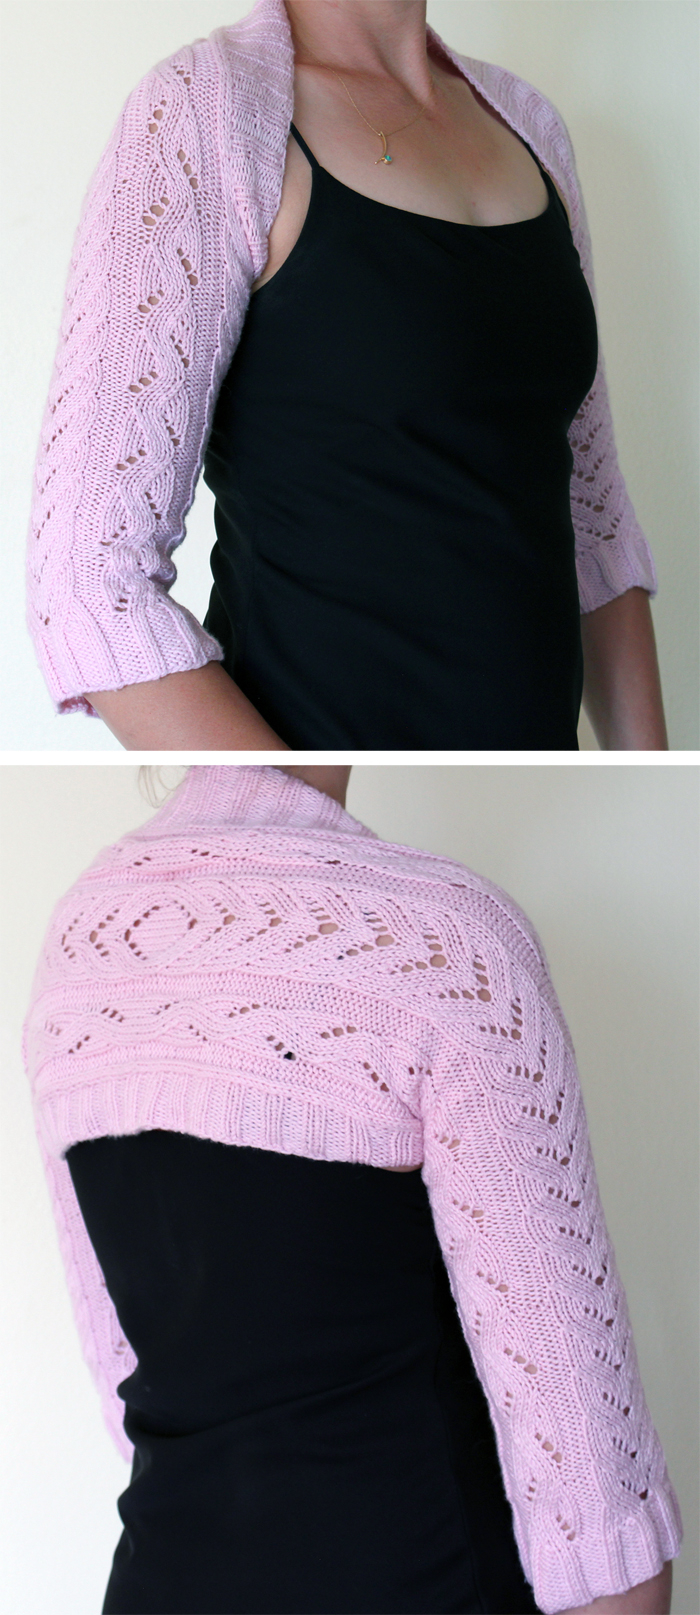 Crochet Cotton Shrug Pattern Shrug And Bolero Knitting Patterns In The Loop Knitting